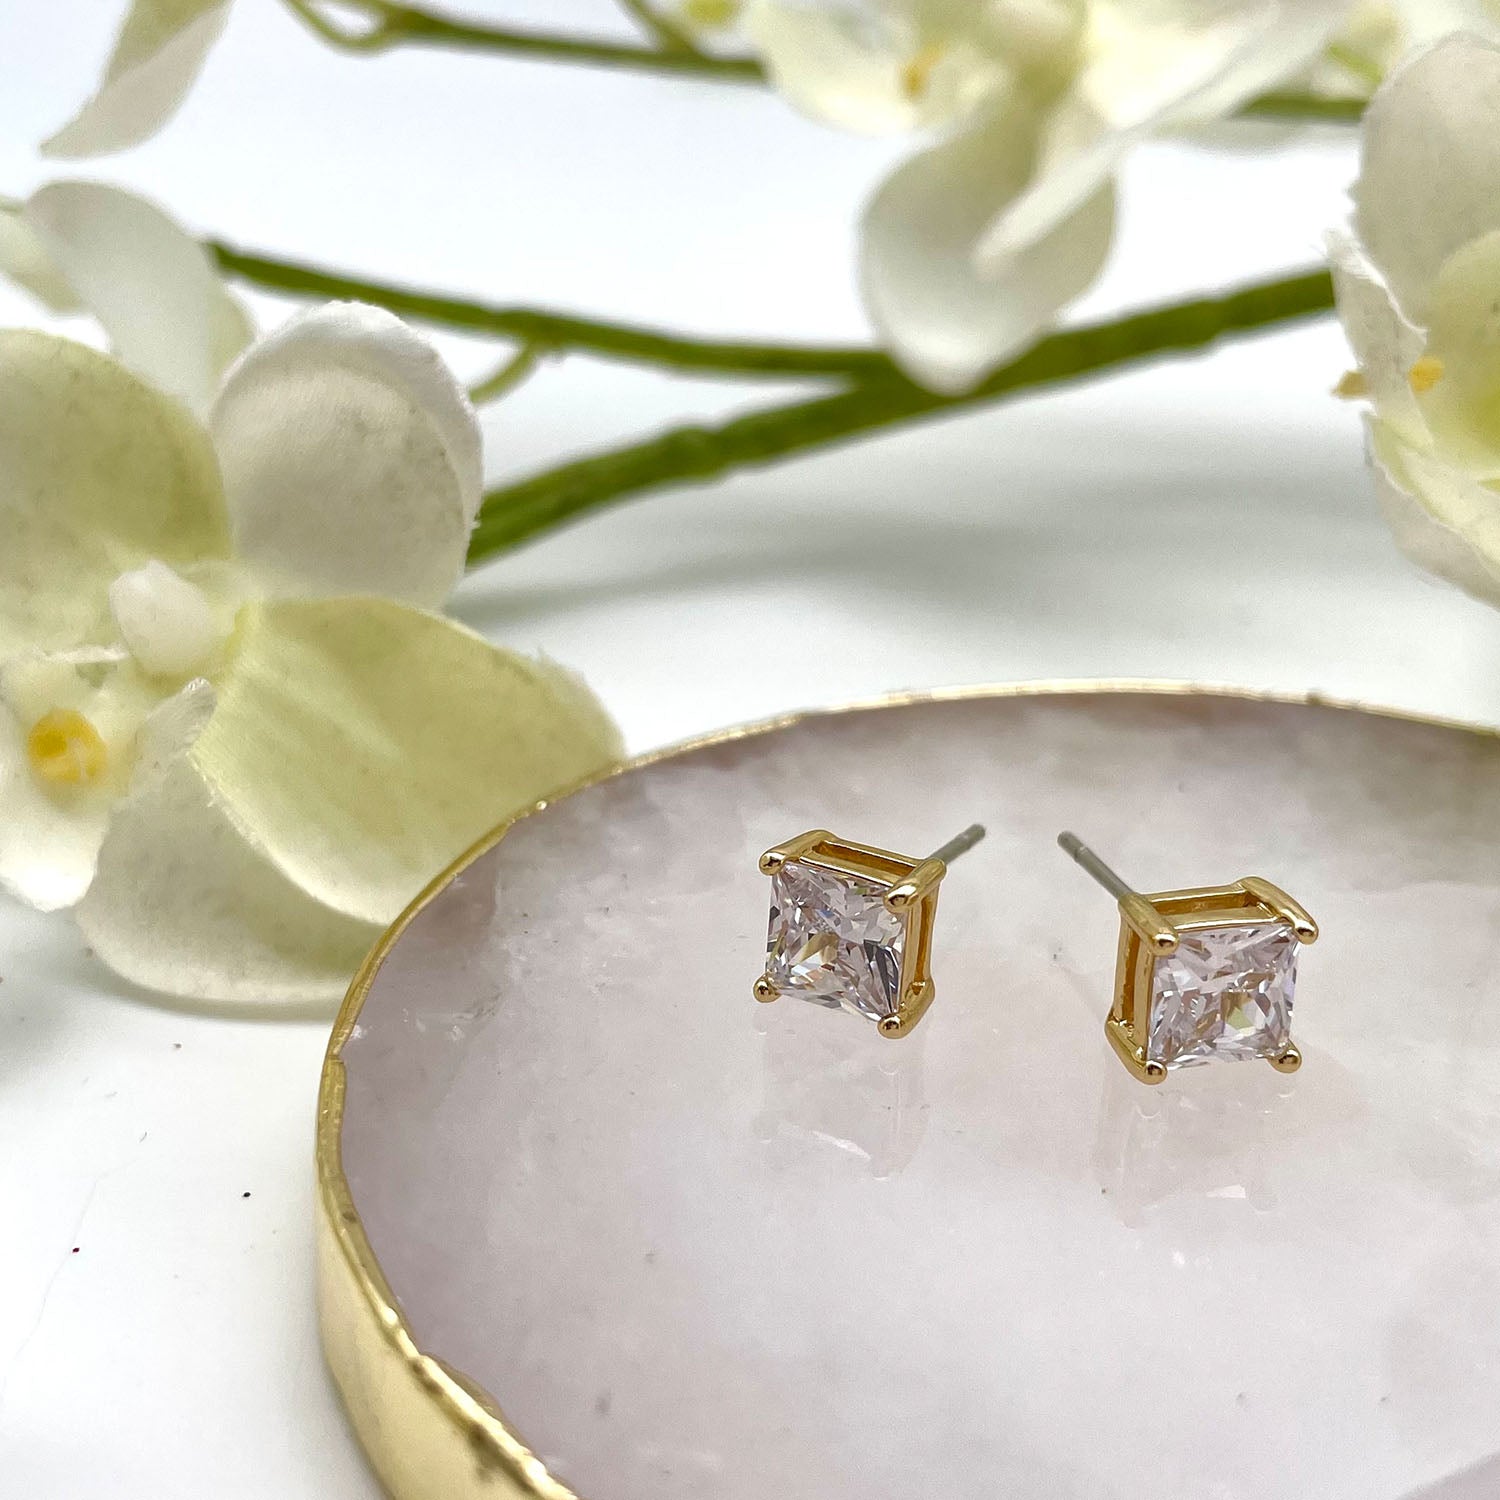 Ali 1.25 Ct. Princess Cut CZ Diamond Stud Earrings, Gold - Zahra Jewelry